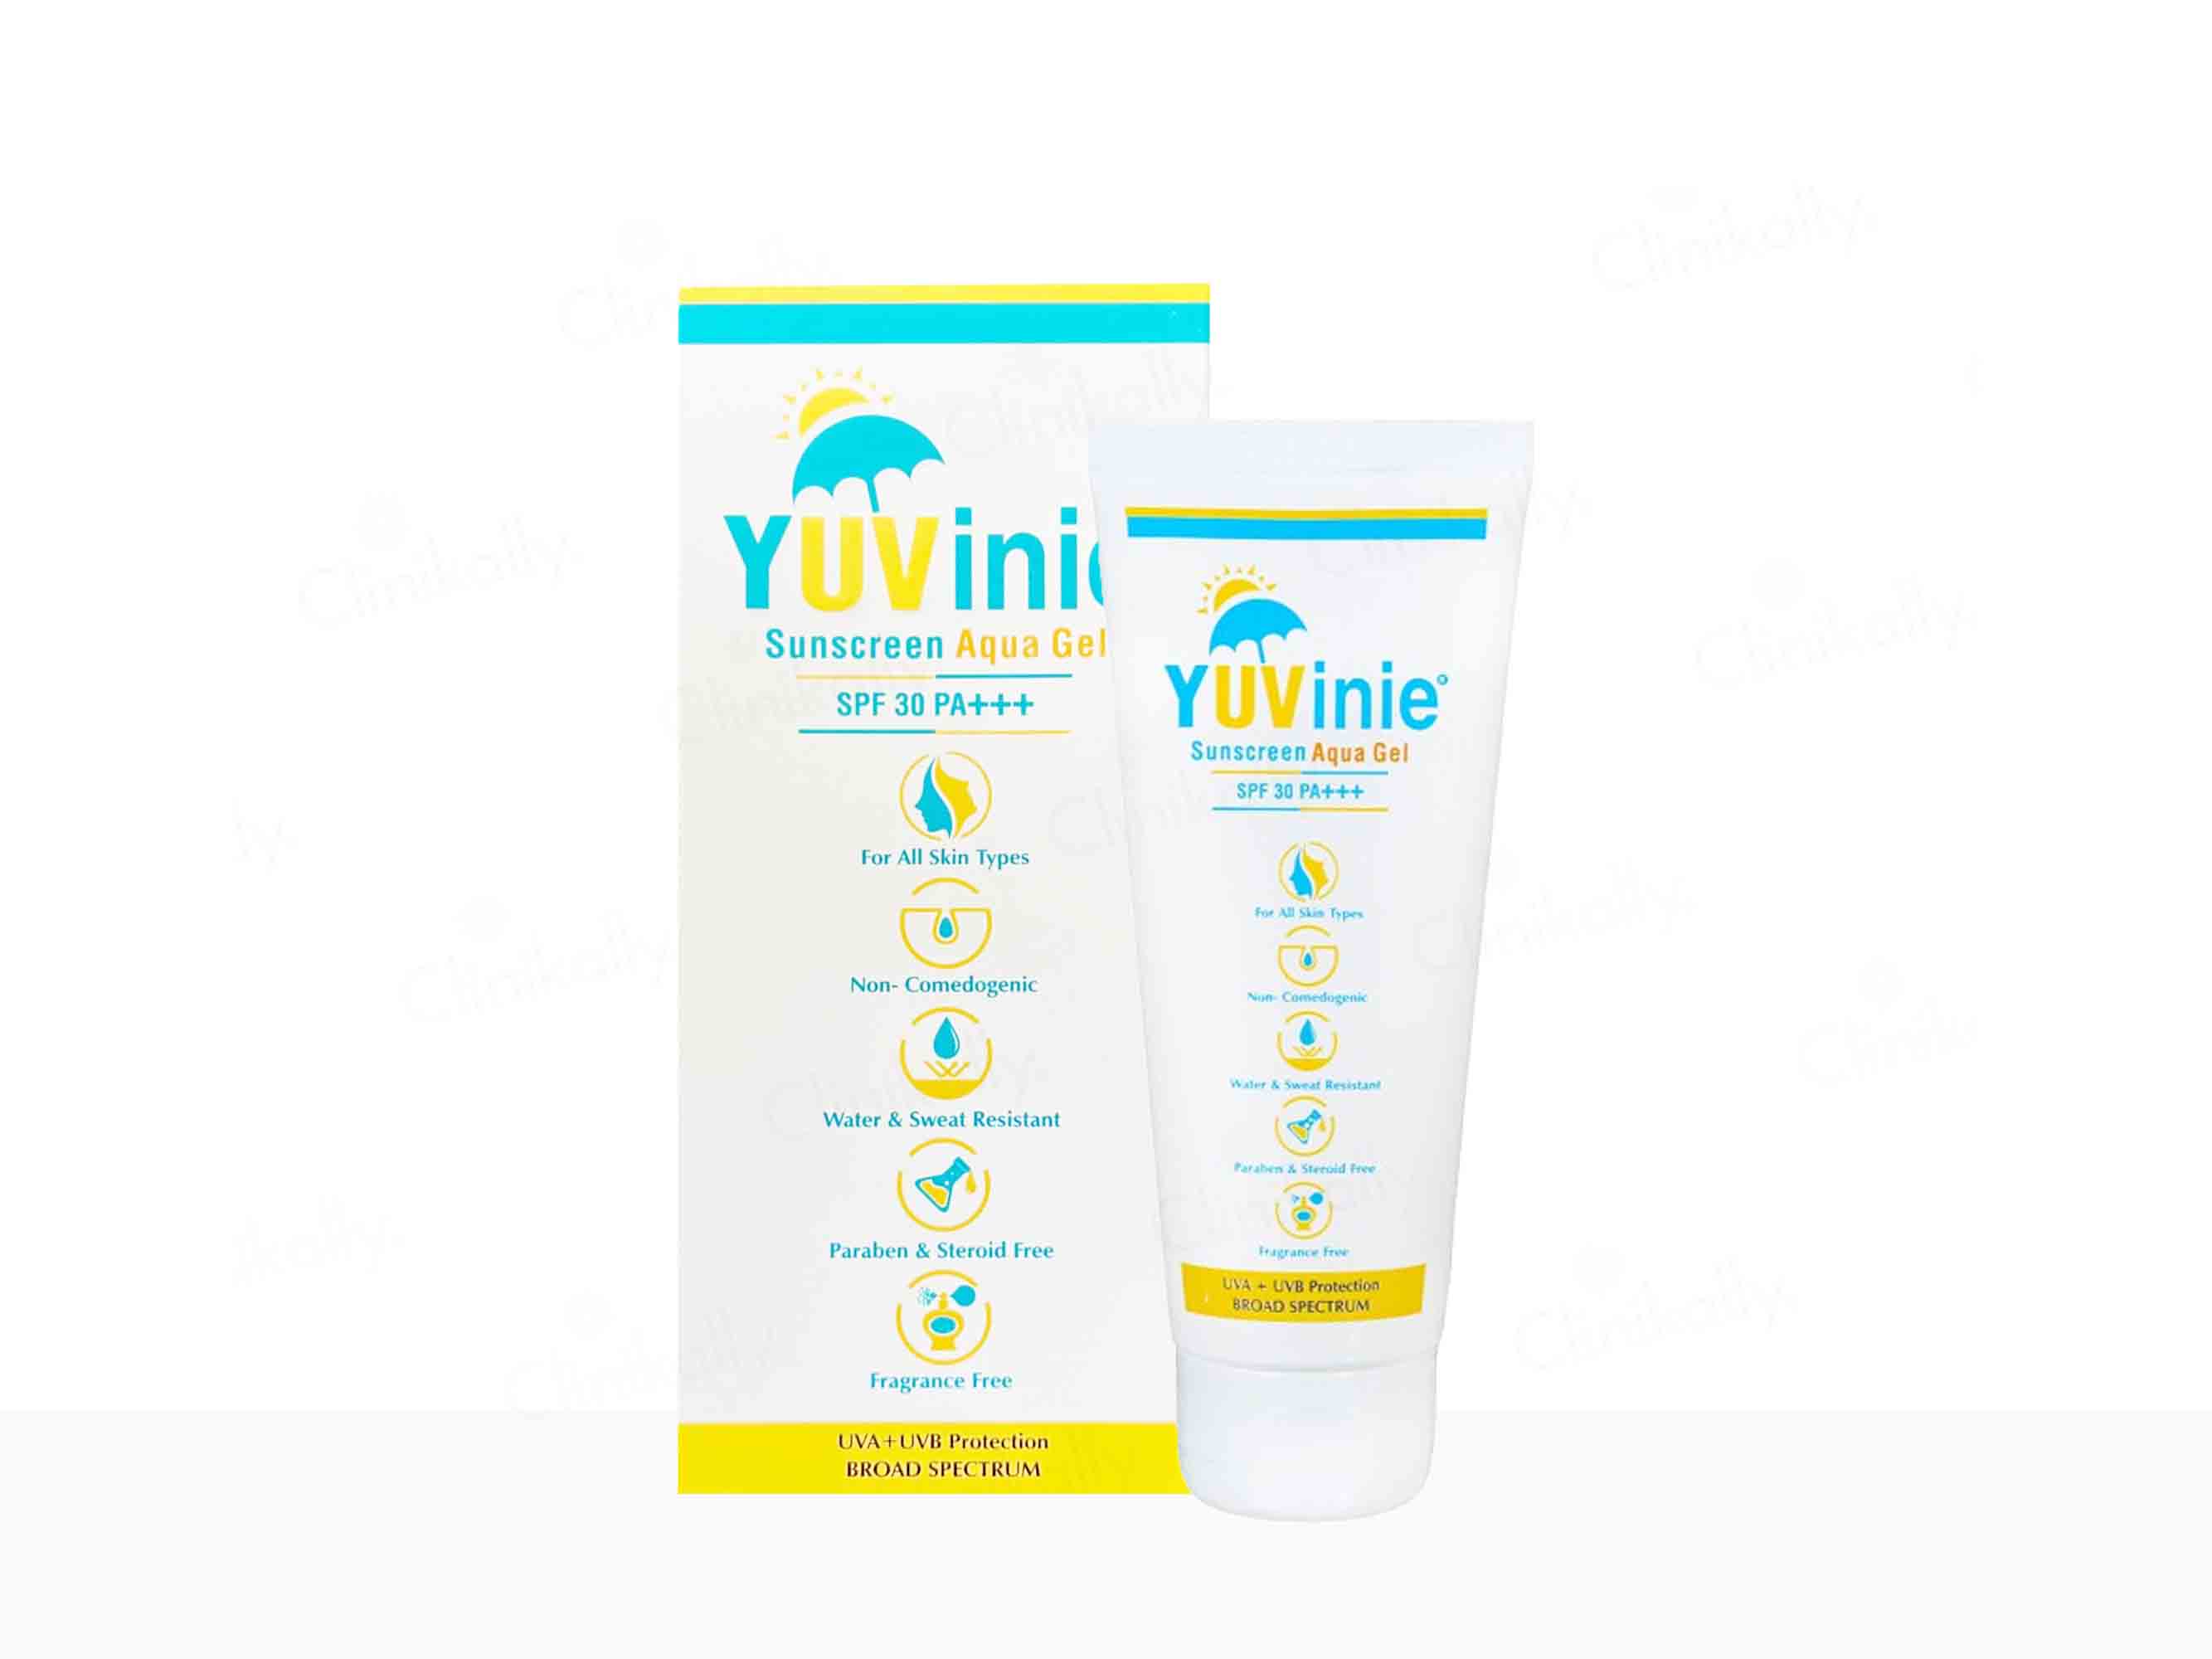 Yuvinie Sunscreen Aqua Gel SPF 30 PA+++